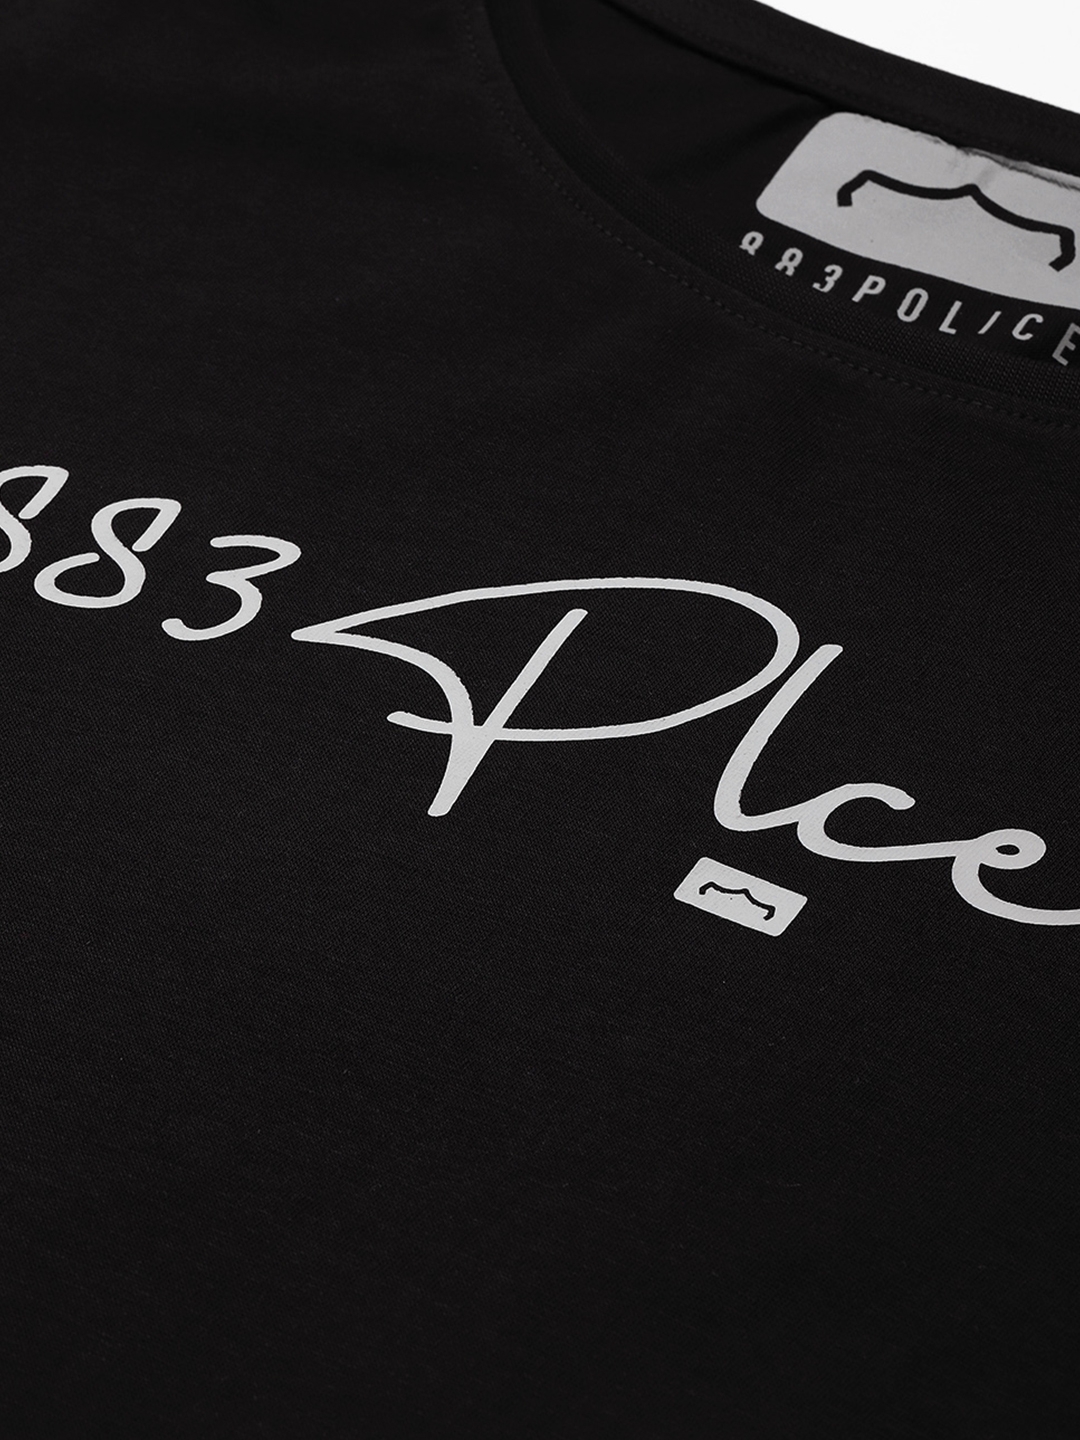 883 Police | Women's Black Cotton Typographic Printed T-Shirt 1